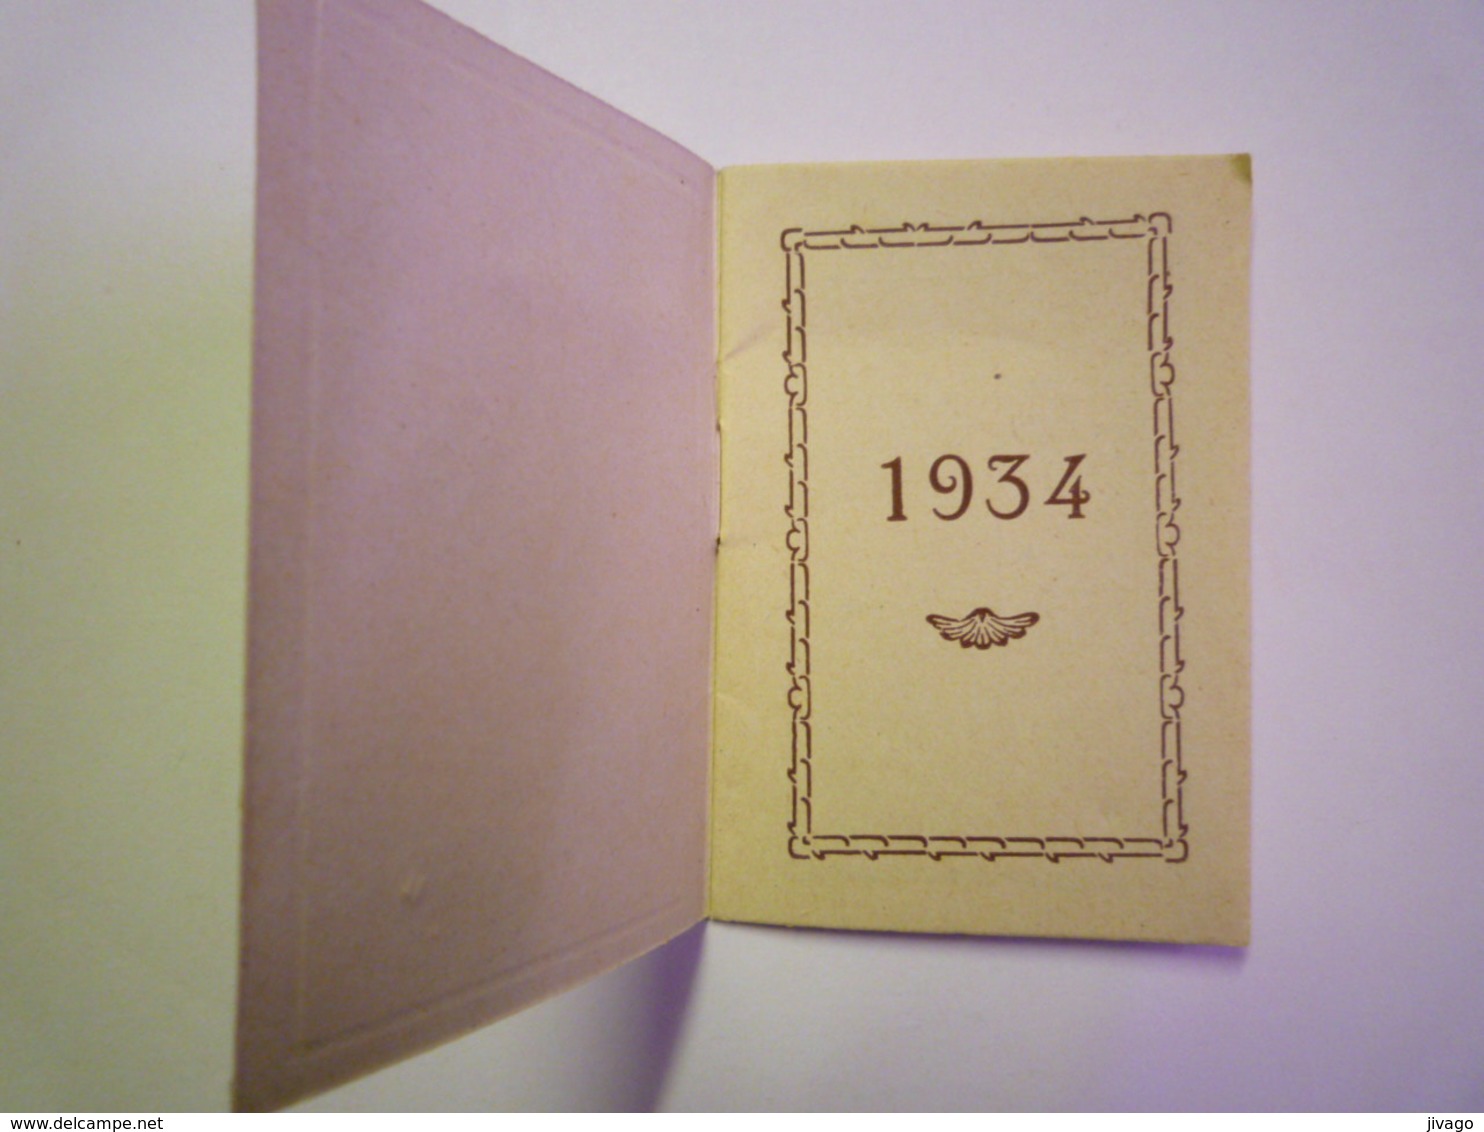 2019 - 1631  Joli Mini Calendrier  1934   (format 5 X 7,5cm) - Petit Format : 1921-40